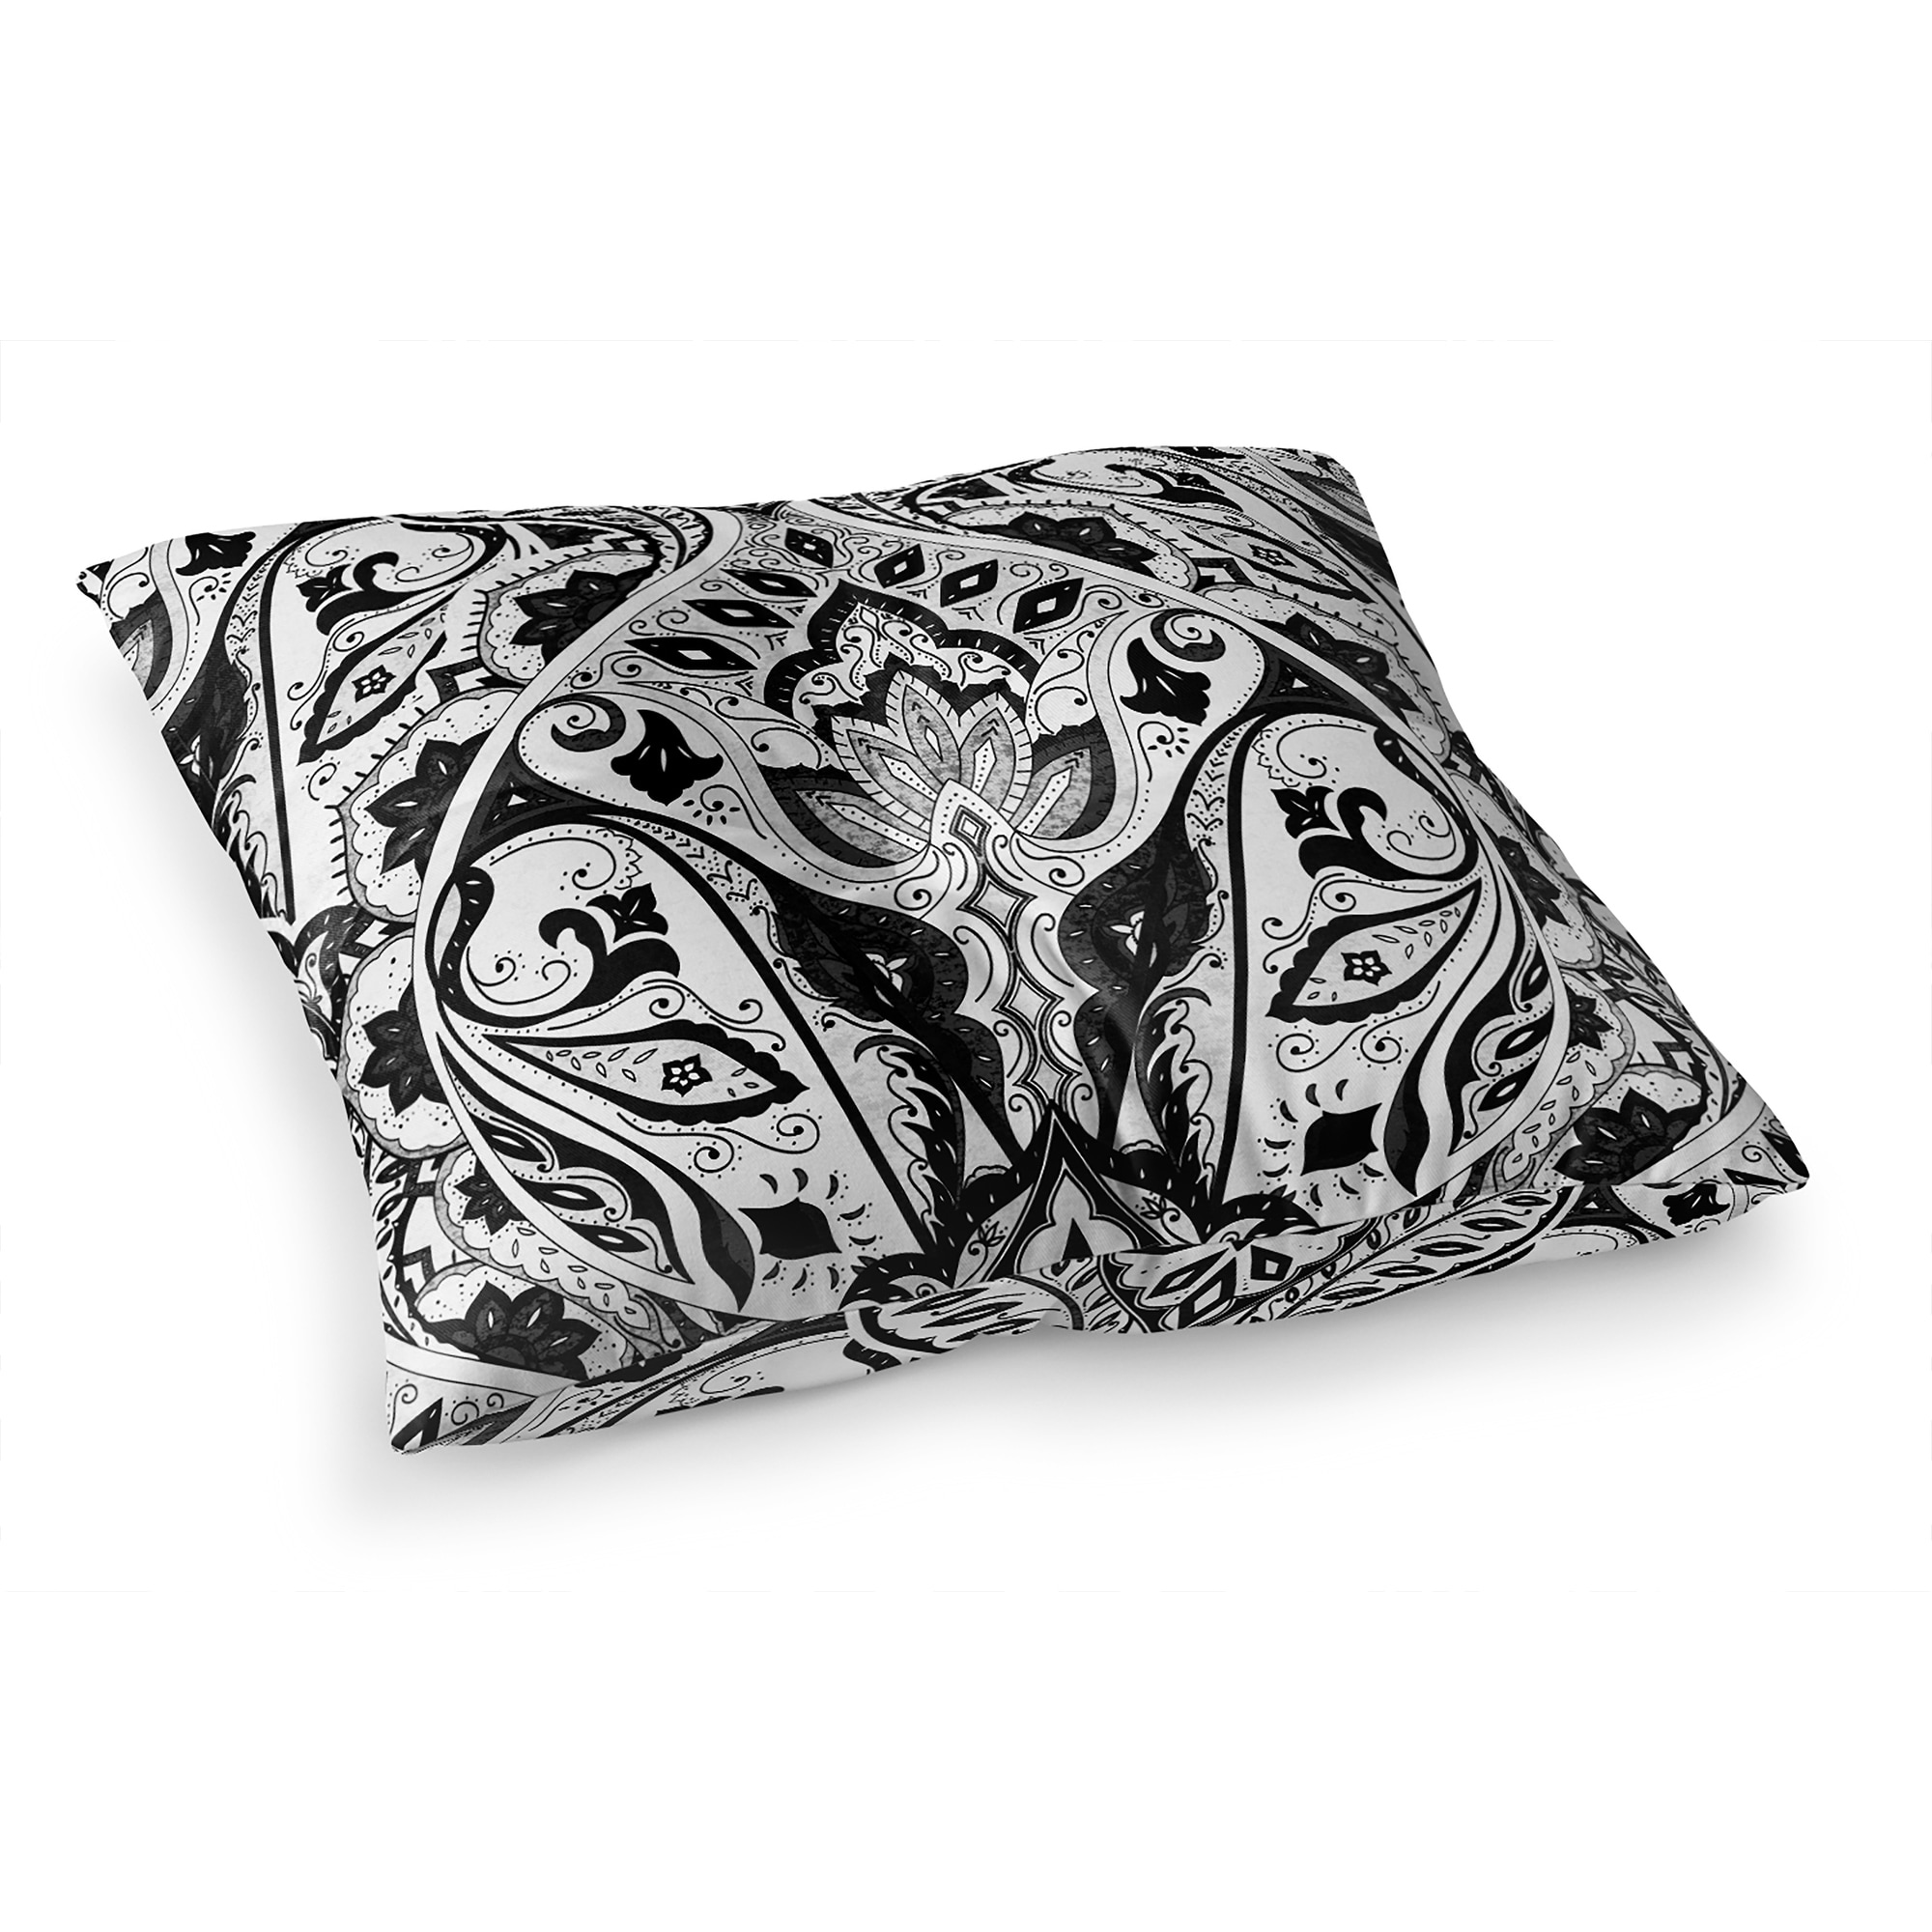 black and white floor pillow